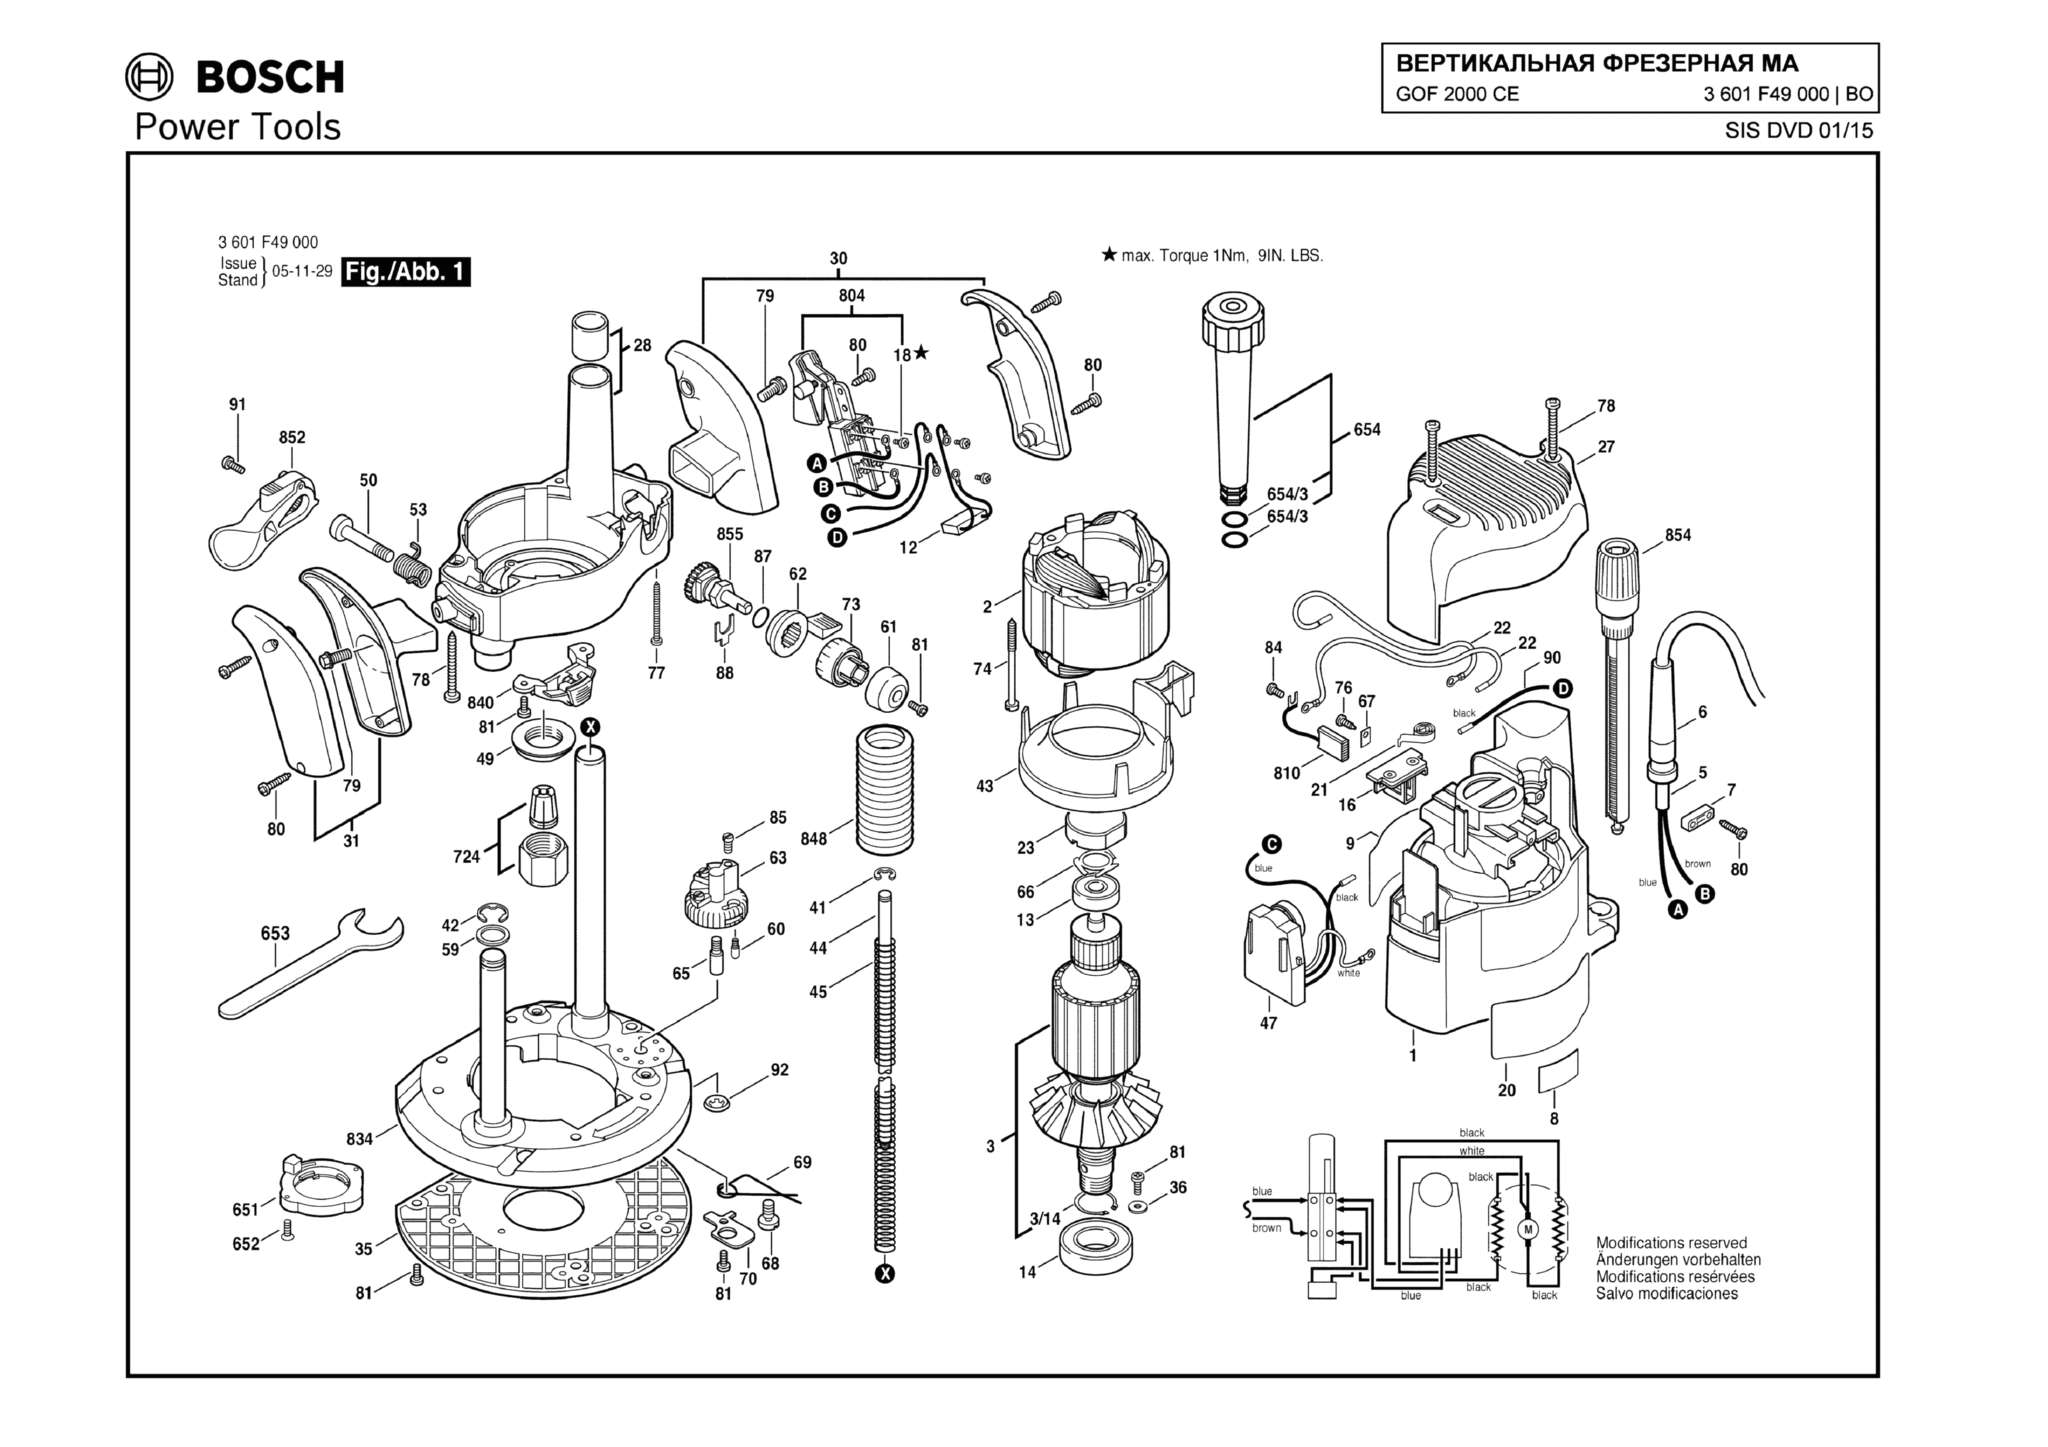 Запчасти, схема и деталировка Bosch GOF 2000 CE (ТИП 3601F49000)